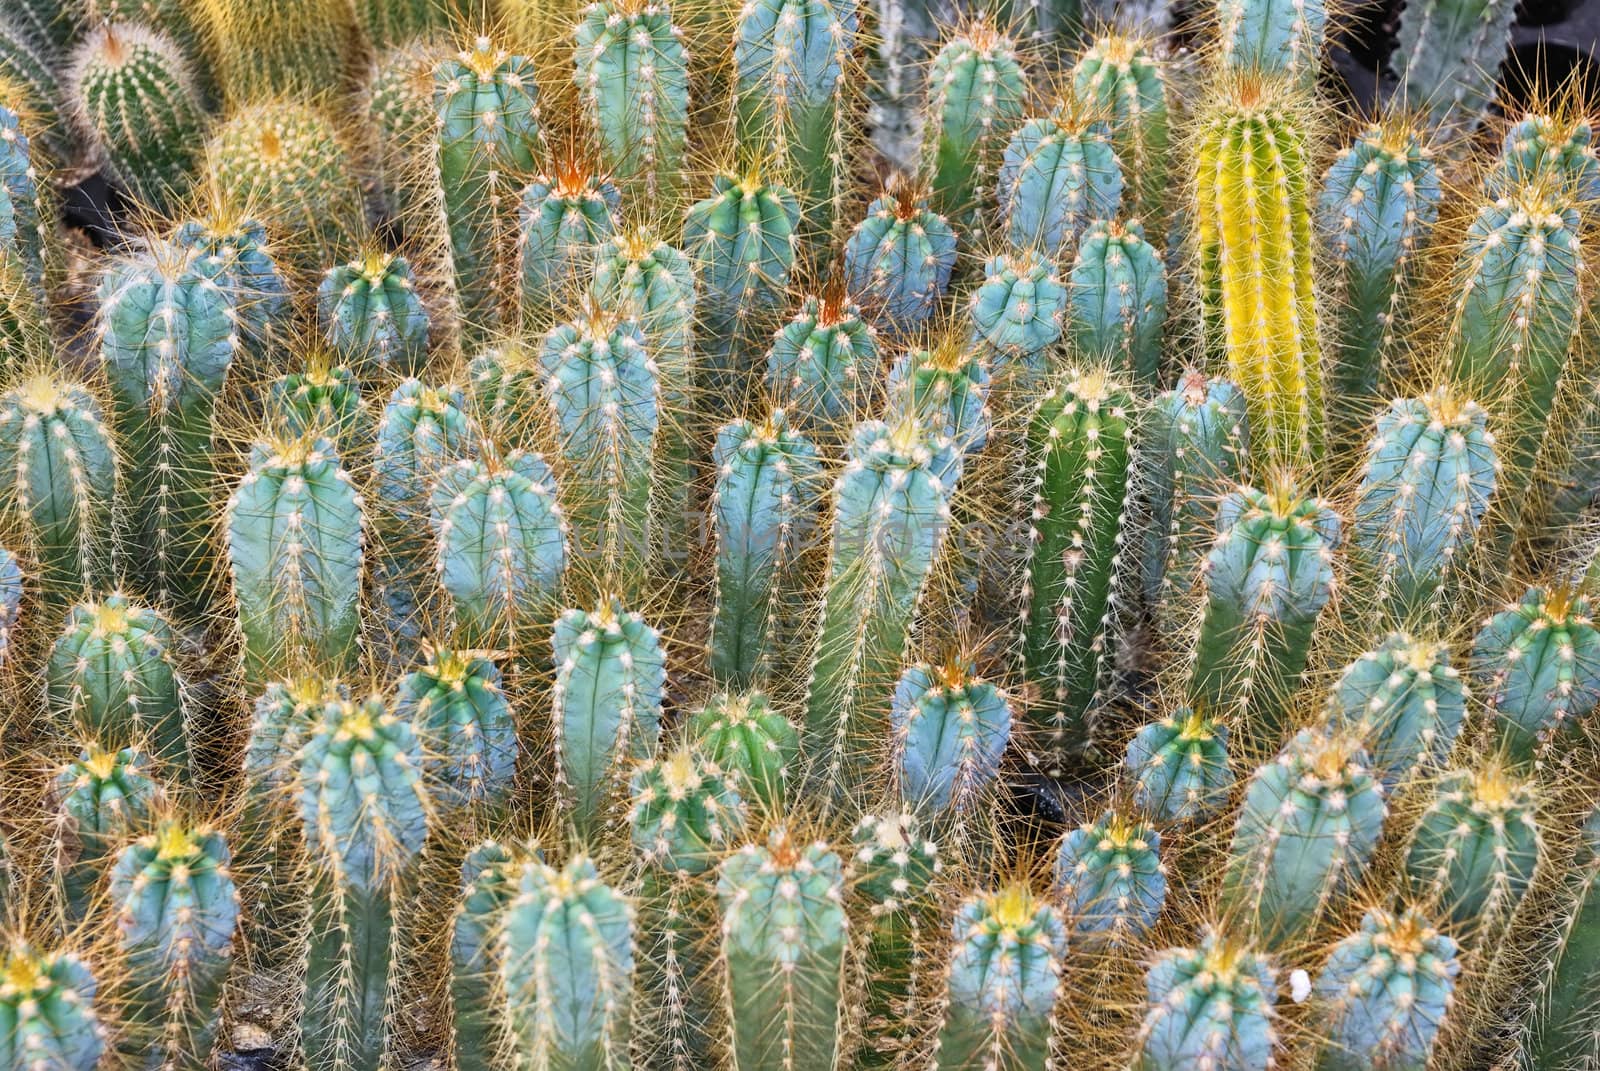 Cacti nursery by whitechild